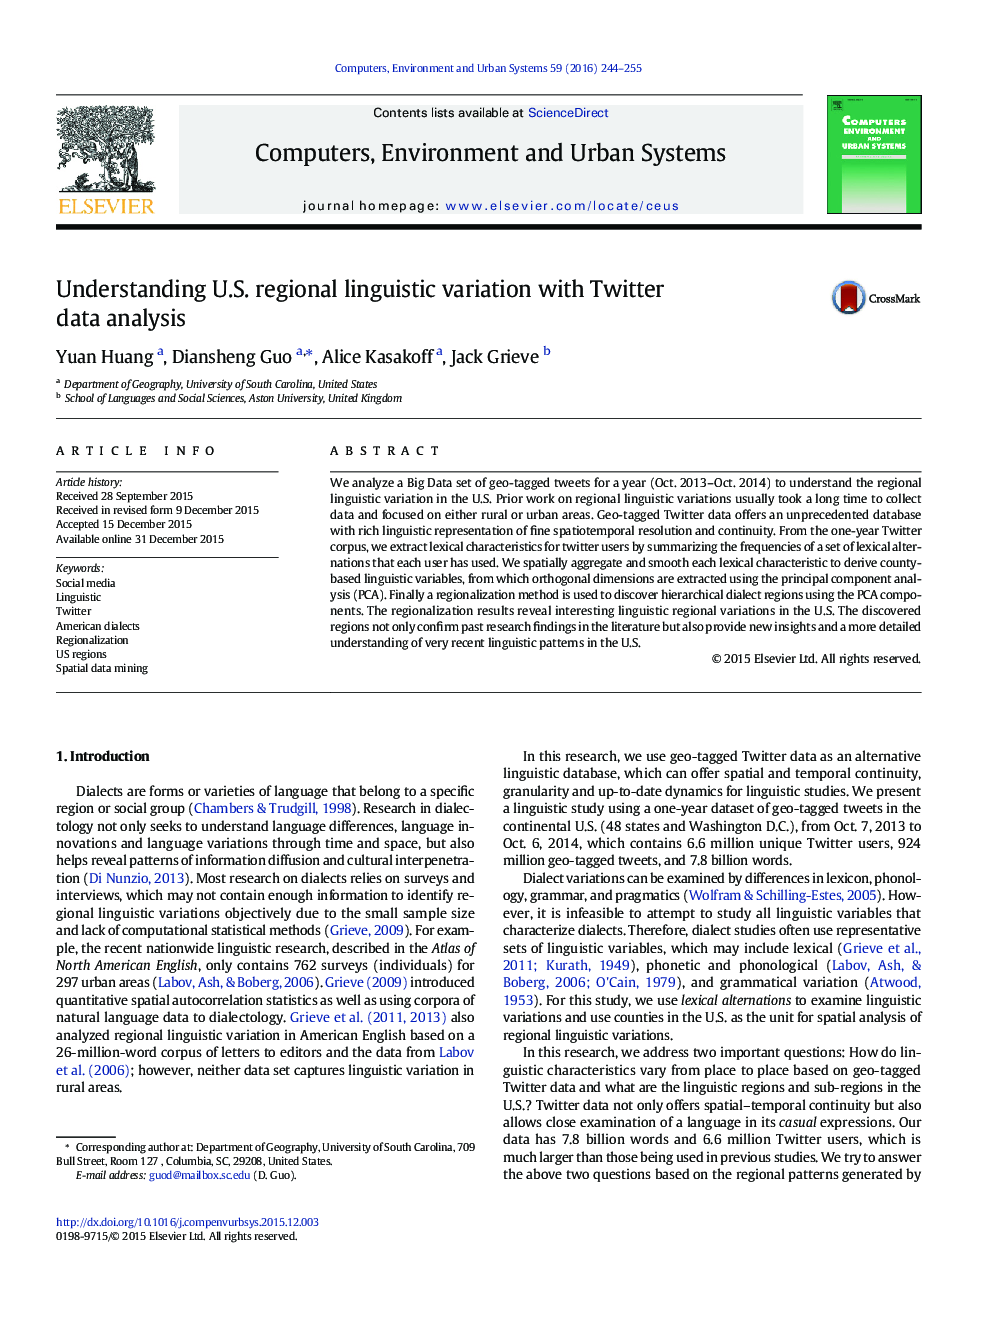 Understanding U.S. regional linguistic variation with Twitter data analysis